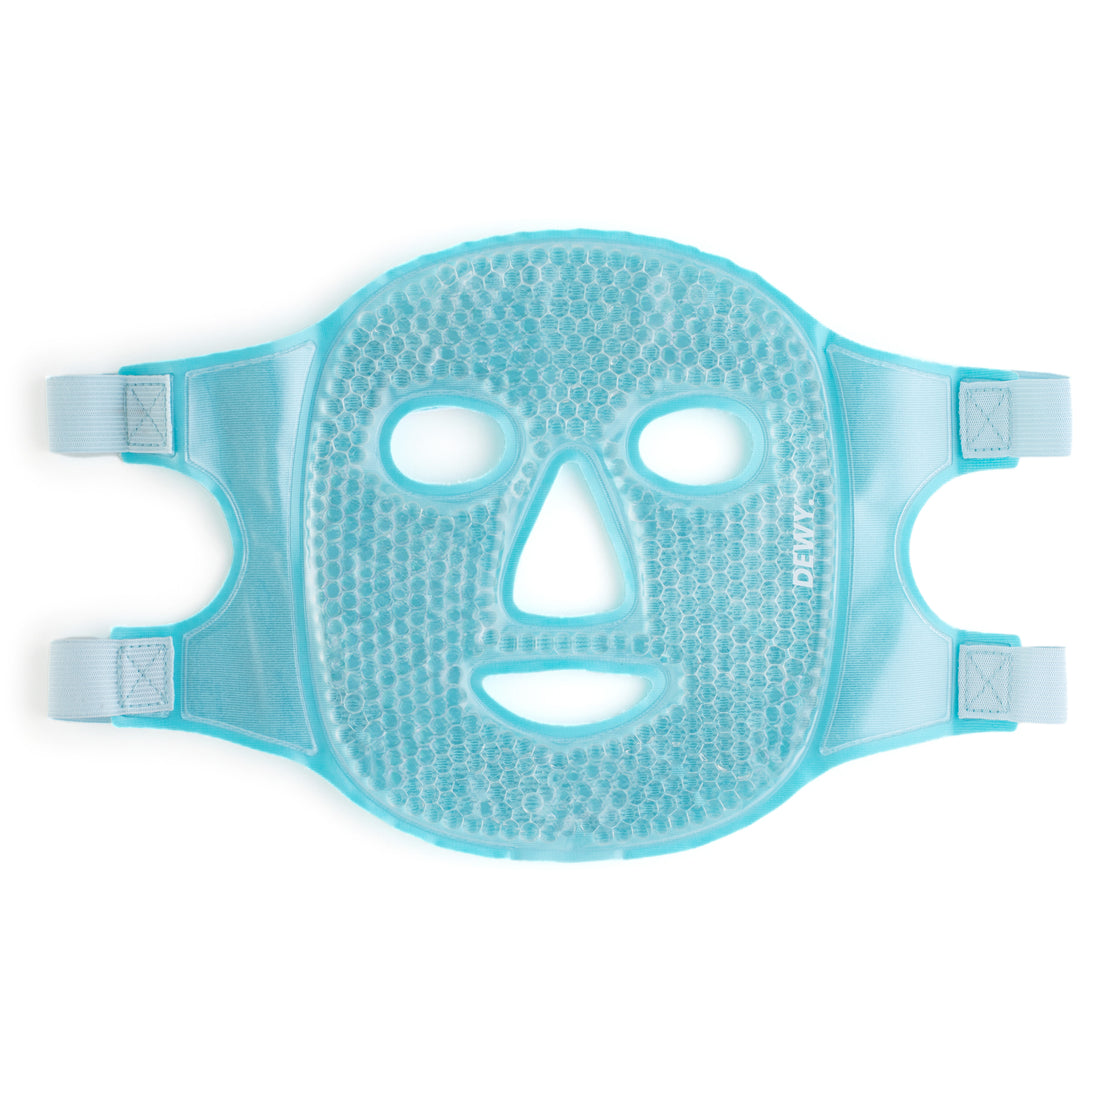 Spa Face Mask